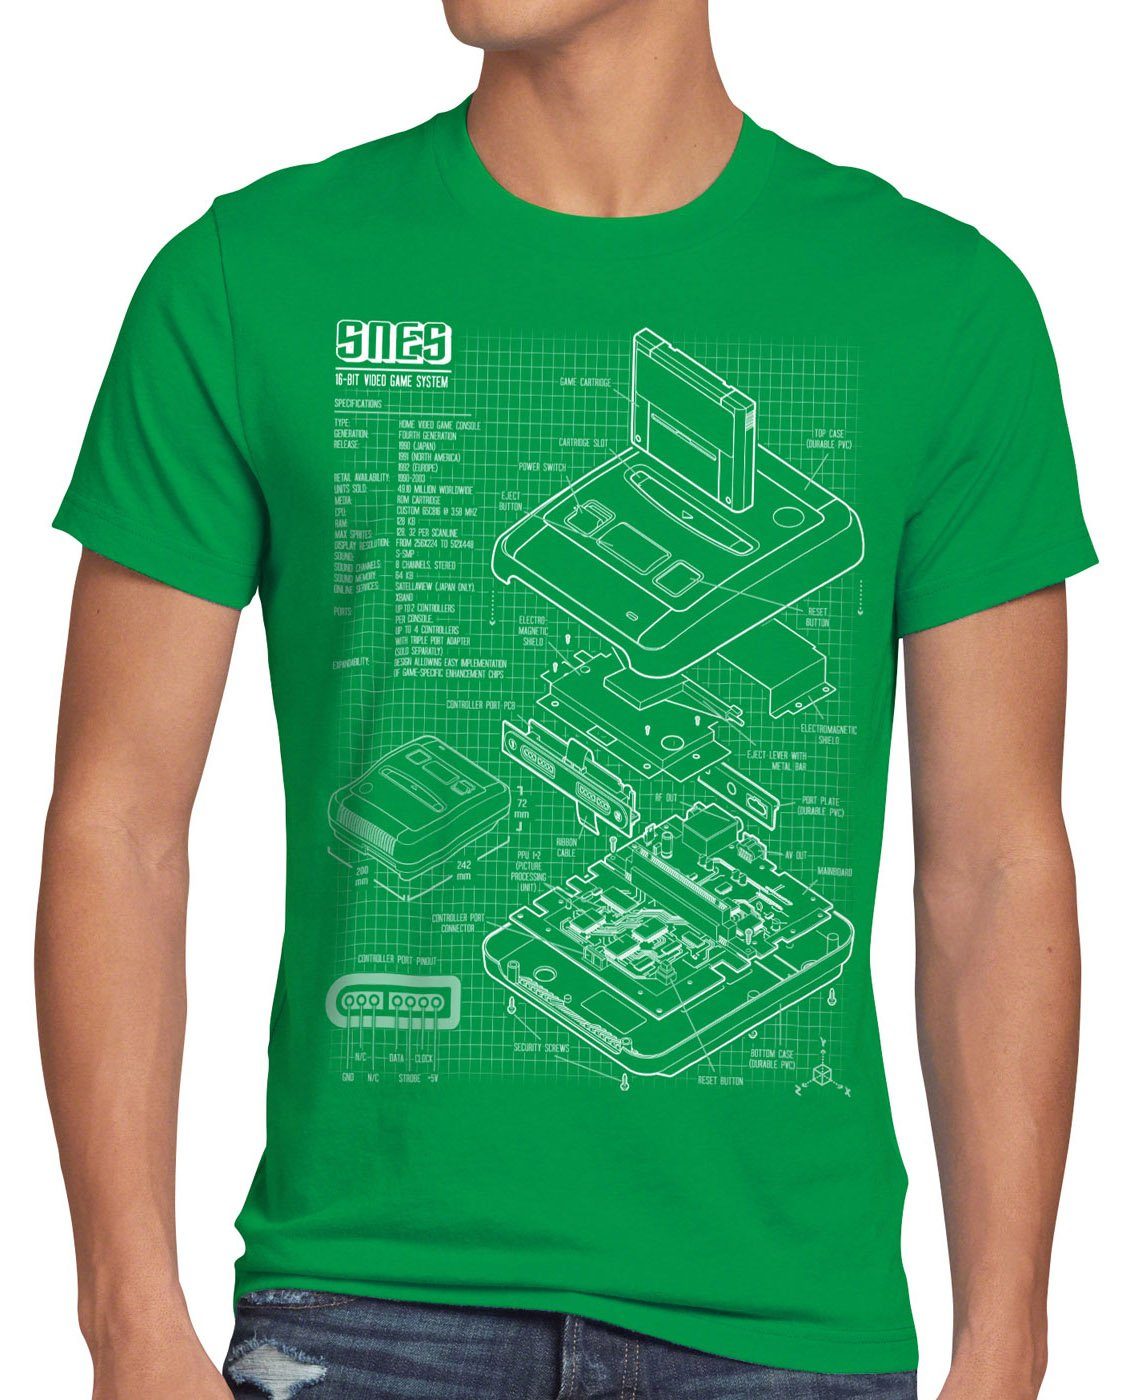 grün SNES Print-Shirt Videospiel T-Shirt Blaupause Herren 16-Bit style3